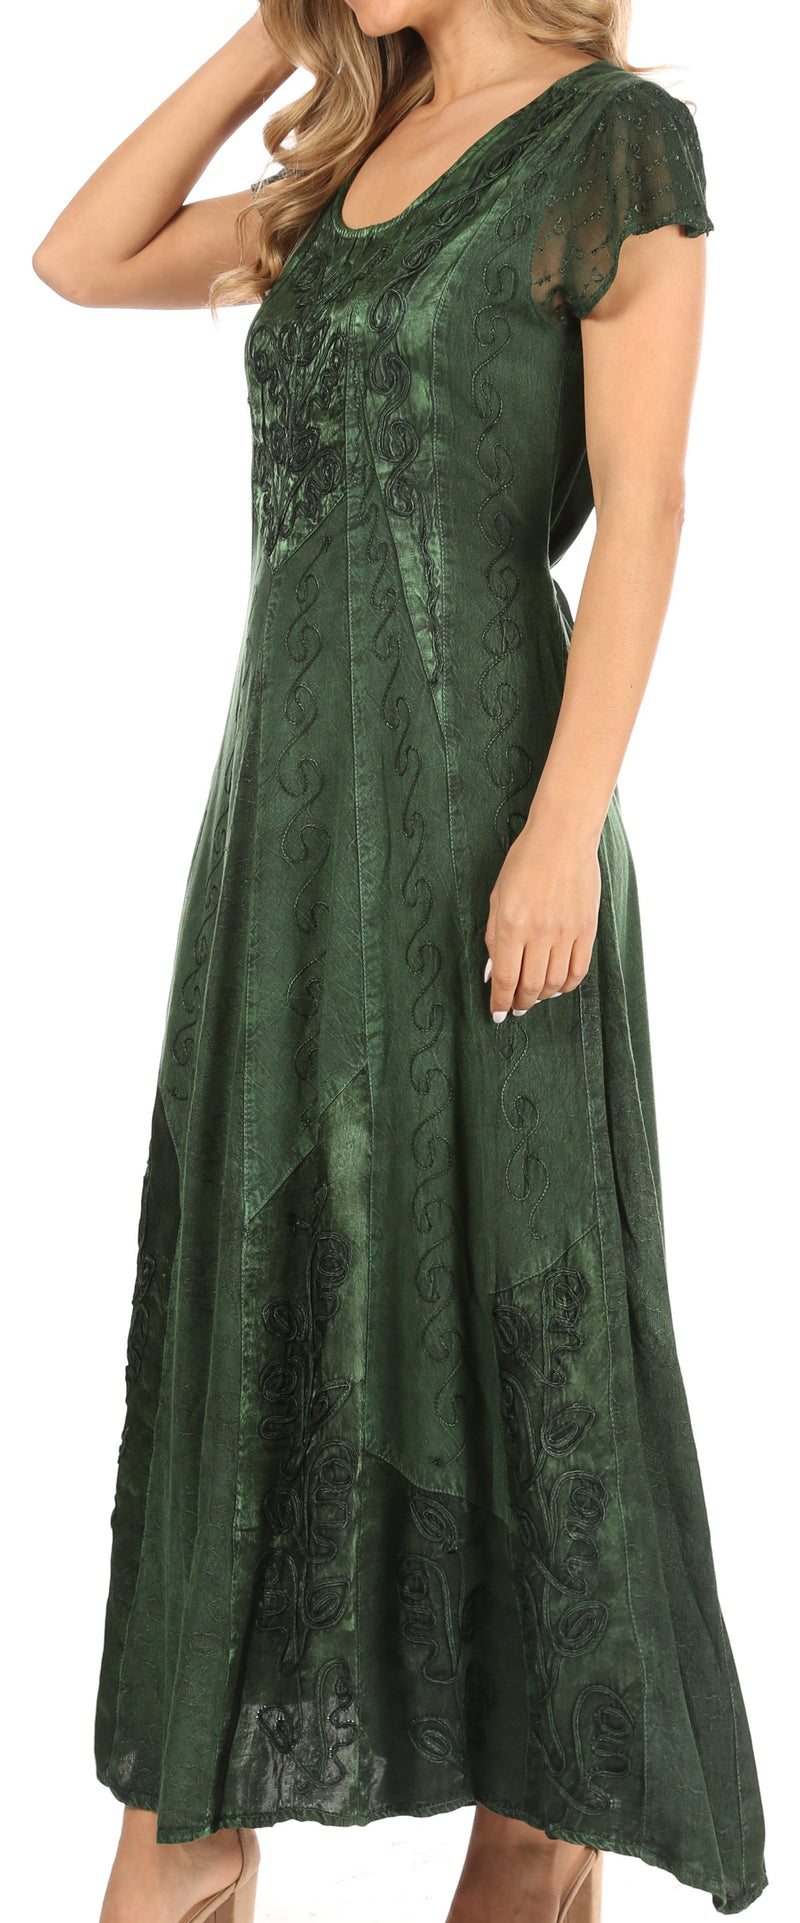 Sakkas Marni Women's Casual Maxi Short Sleeve Stonewashed Long Caftan Dress Lace